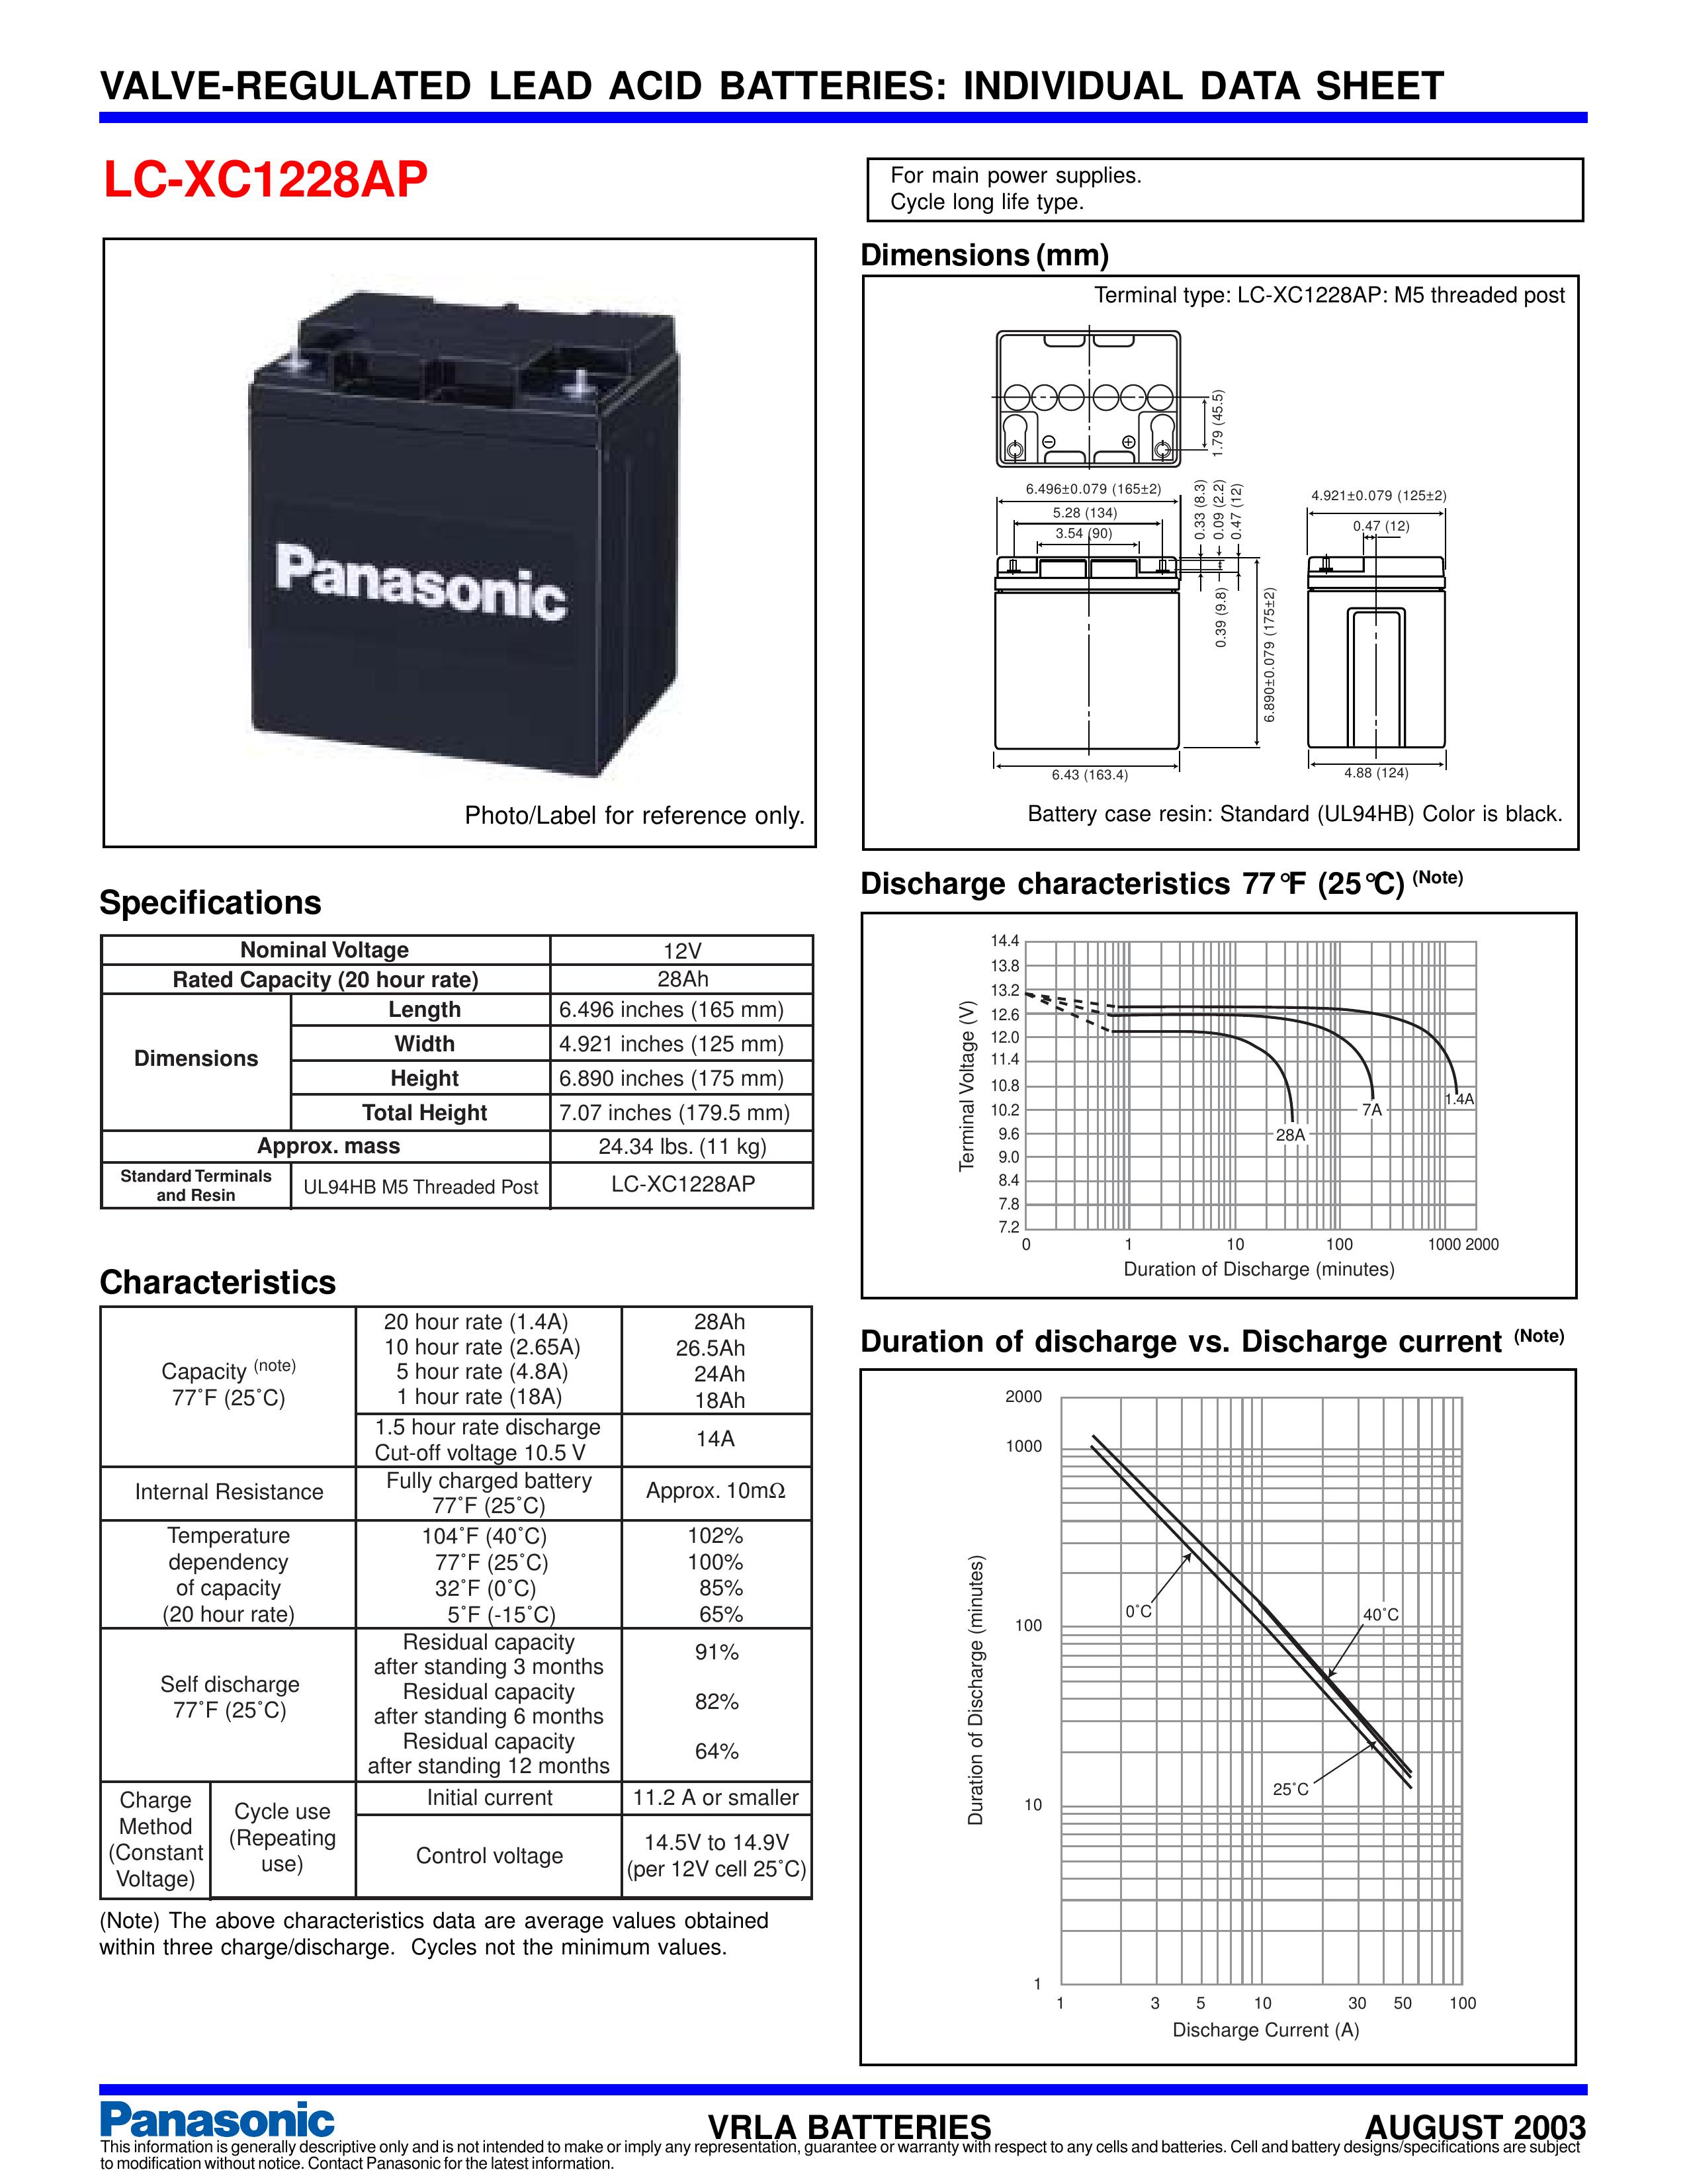 Panasonic LC-XC1228AP Portable Generator User Manual